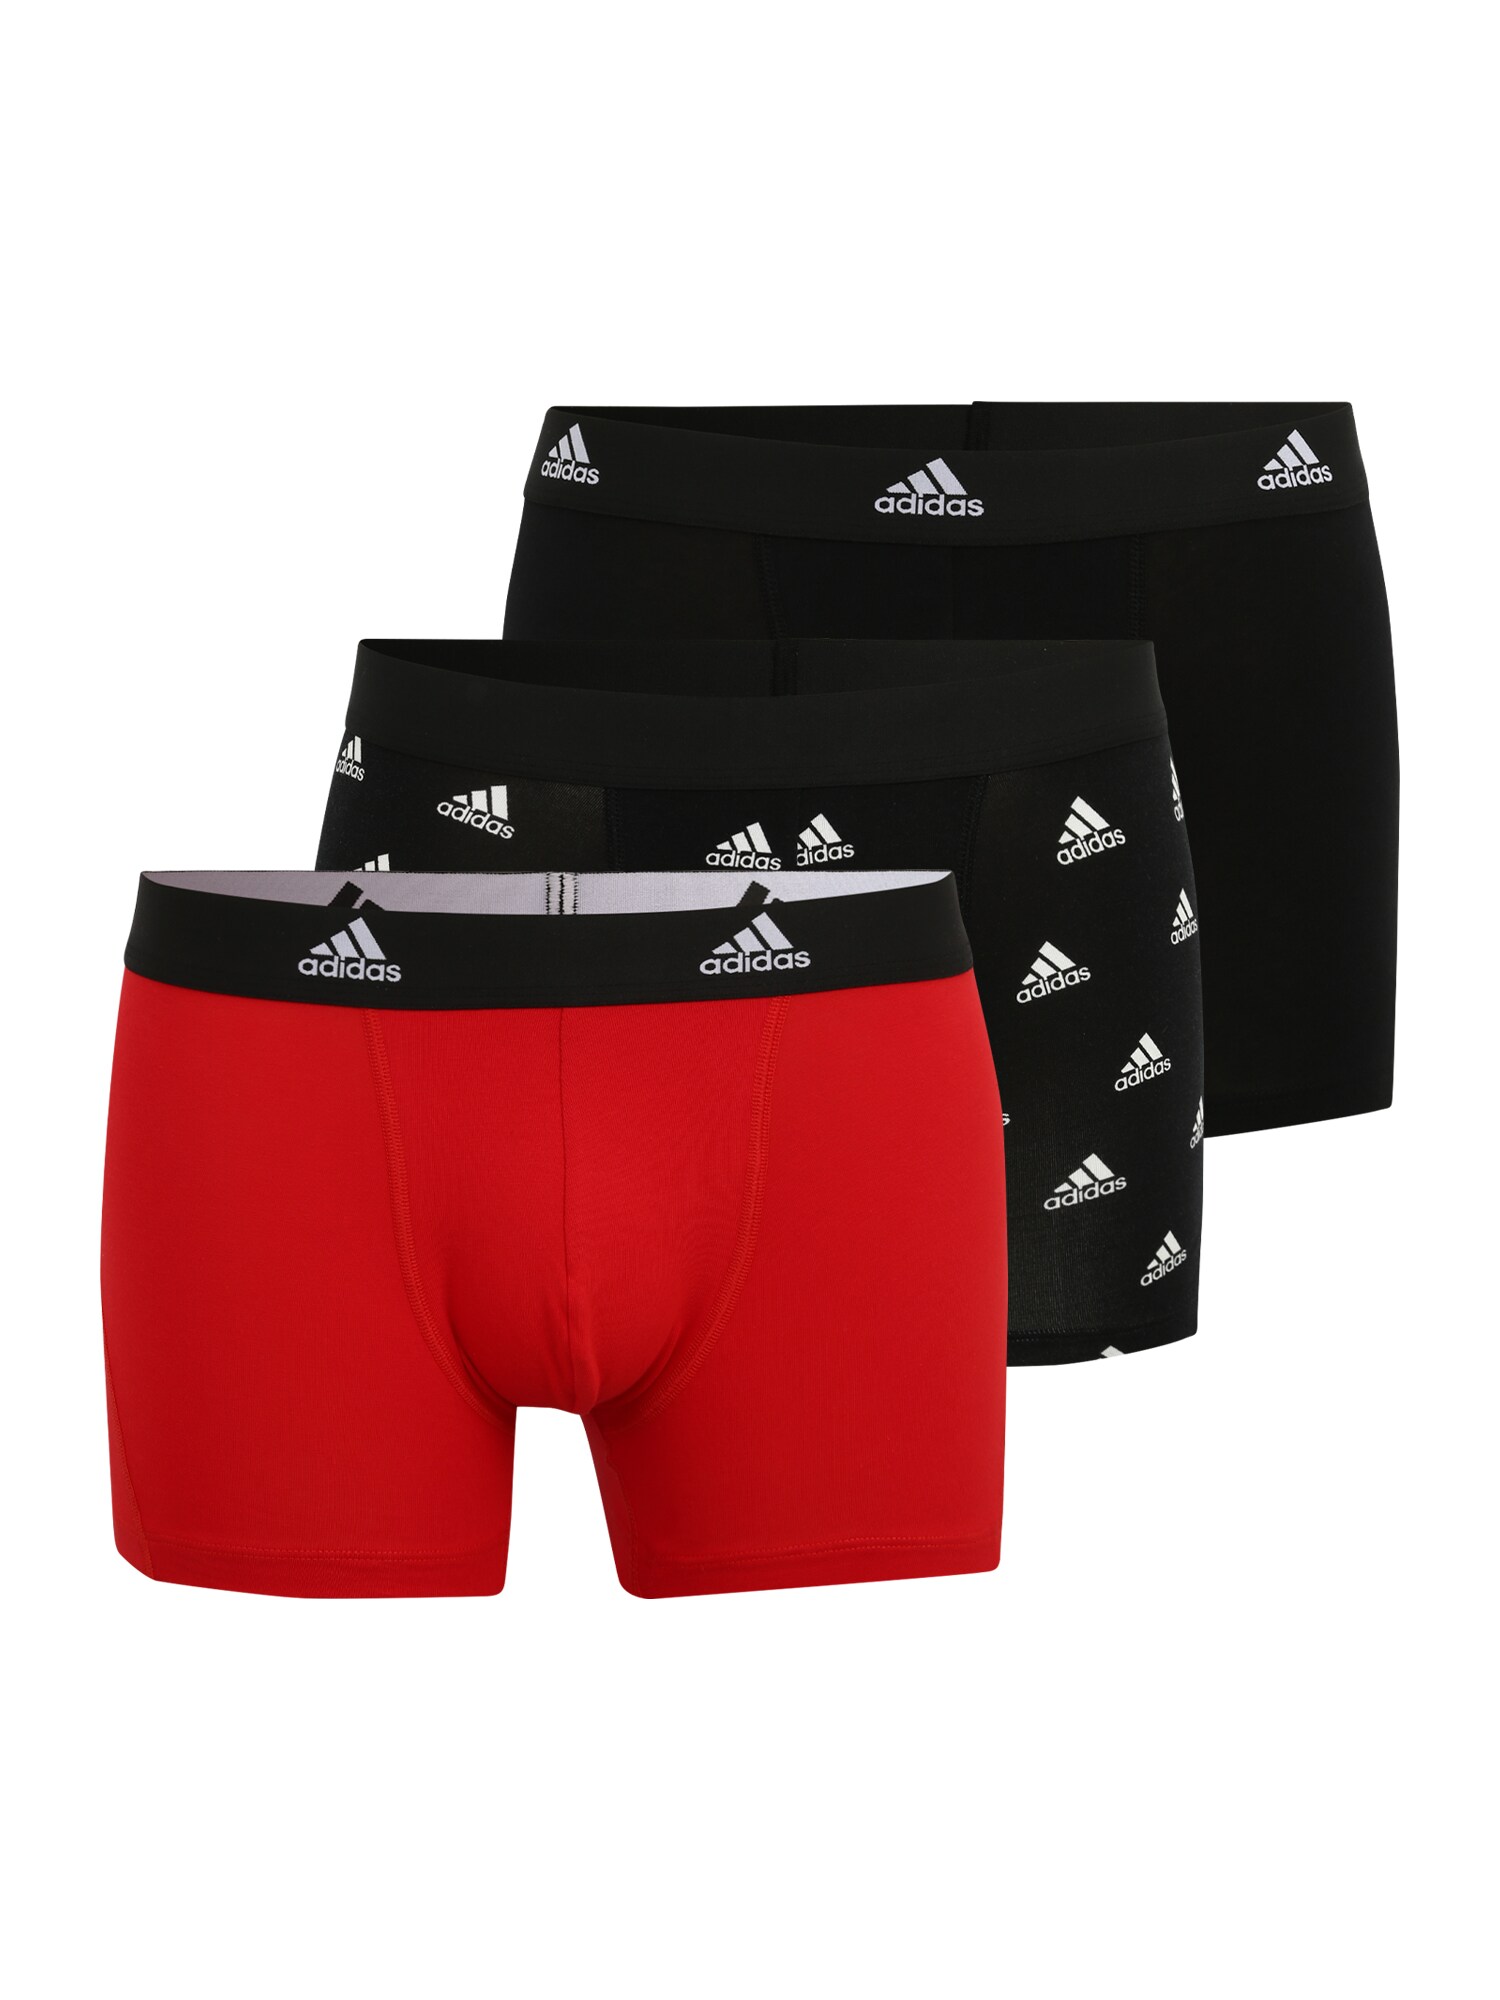 ADIDAS PERFORMANCE Sport alsónadrágok  piros / fekete / fehér